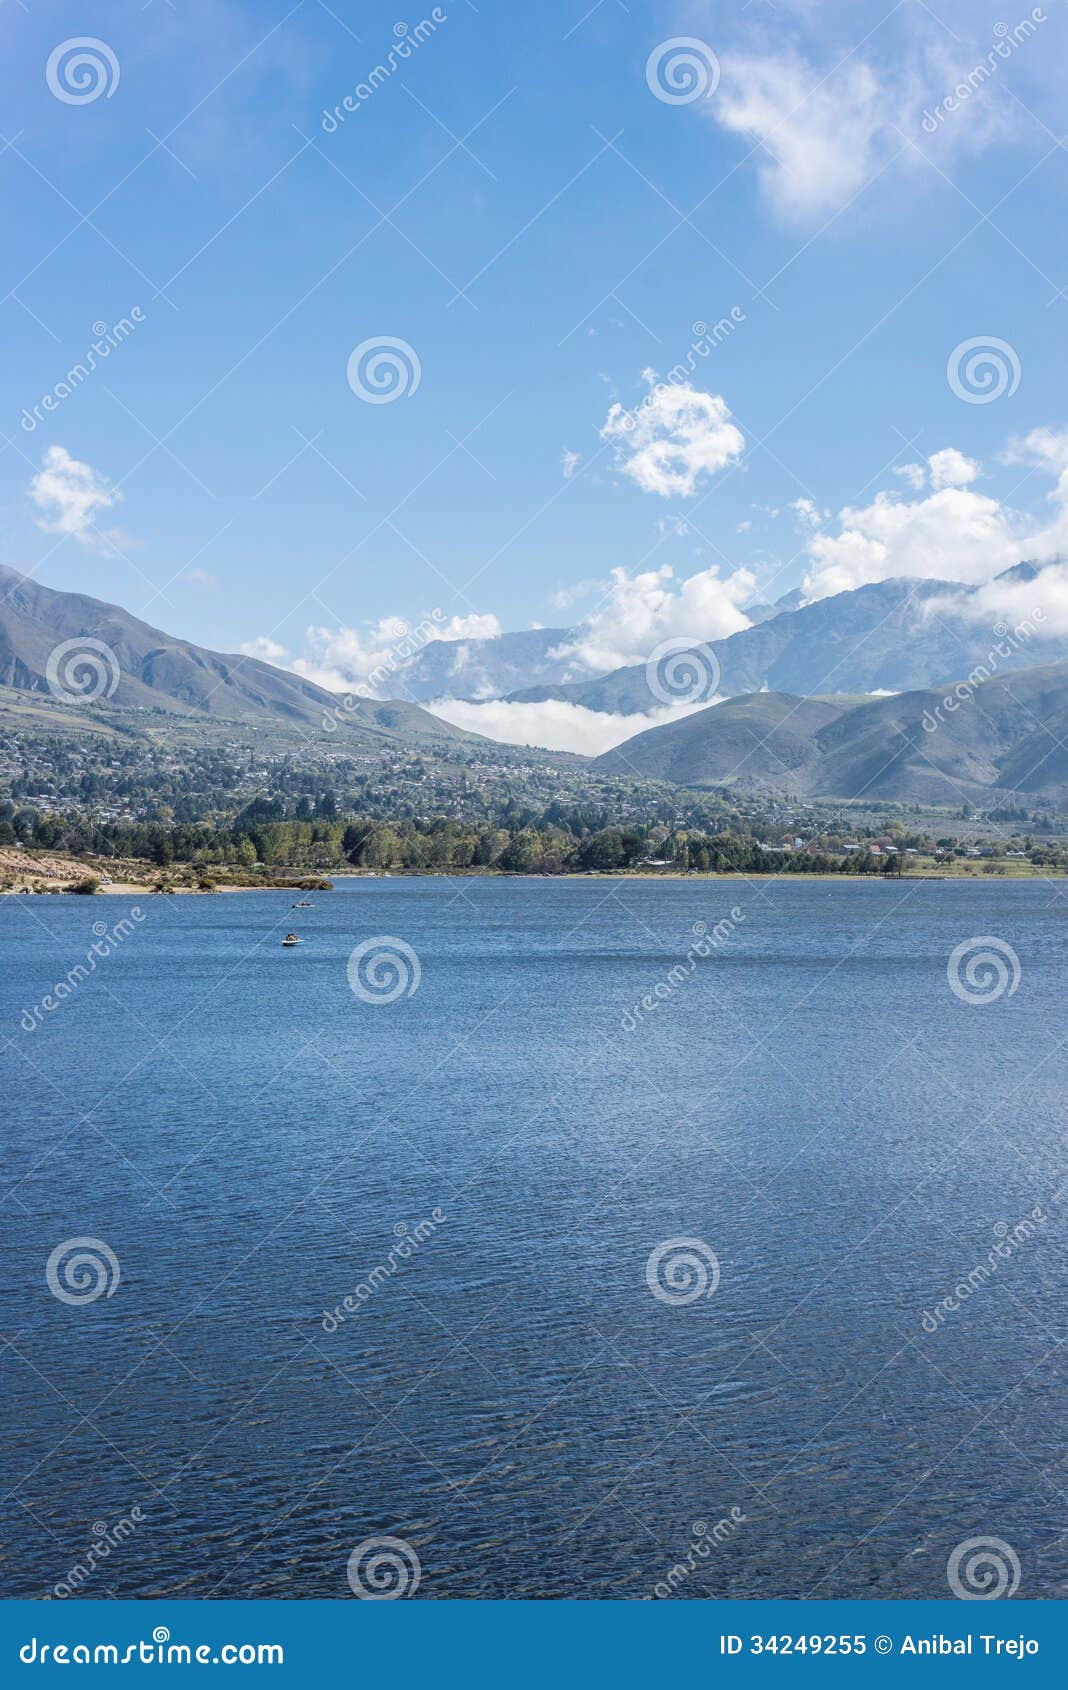 tafi del valle lake in tucuman, argentina.